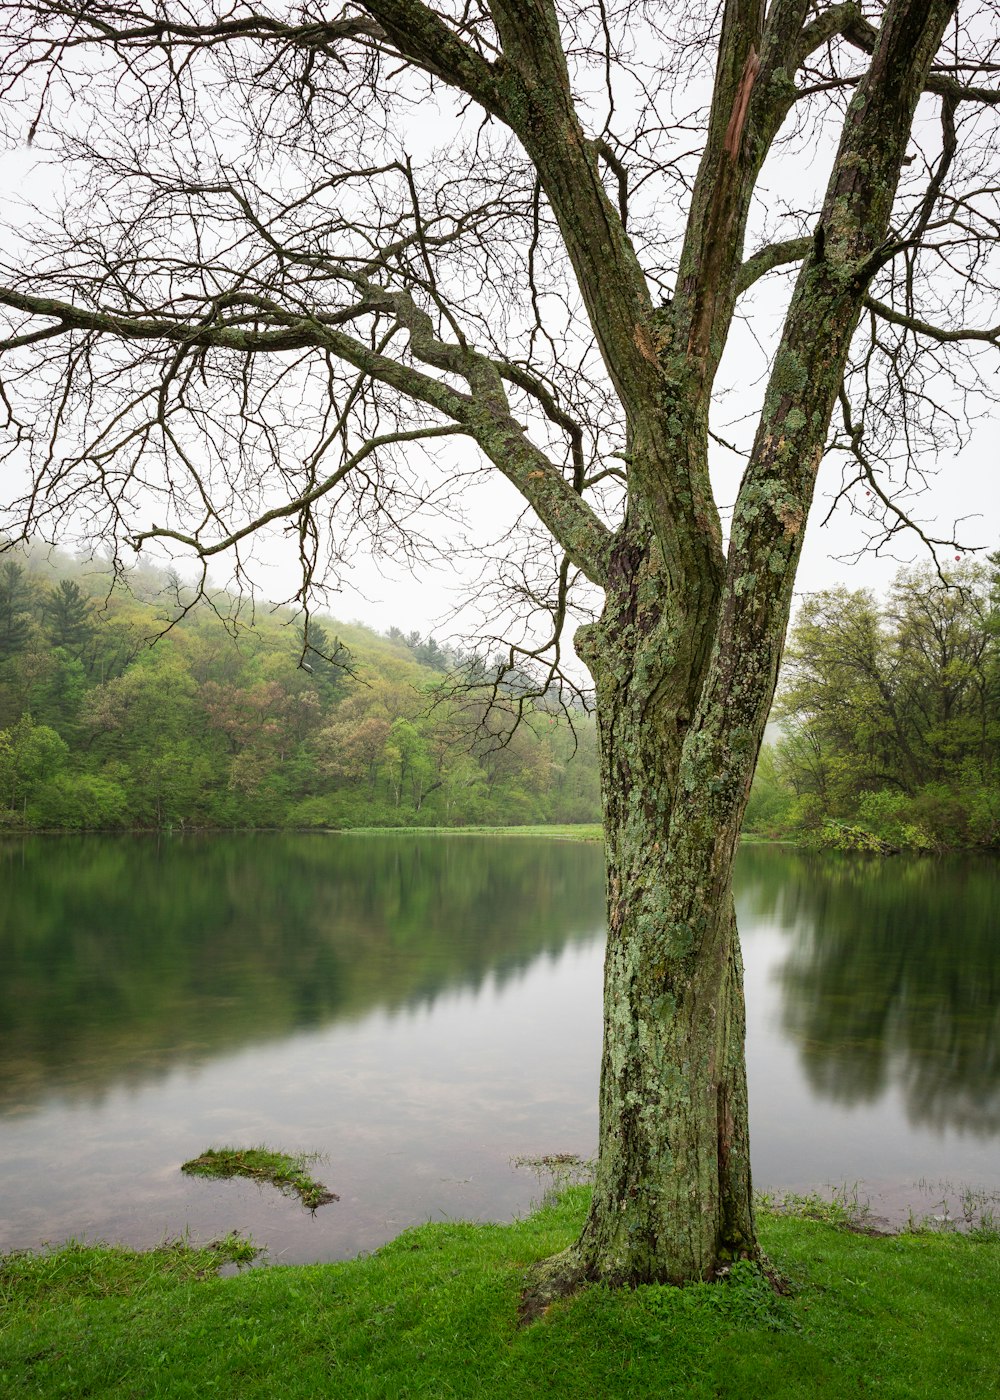 Árvore nua perto do corpo de água calmo